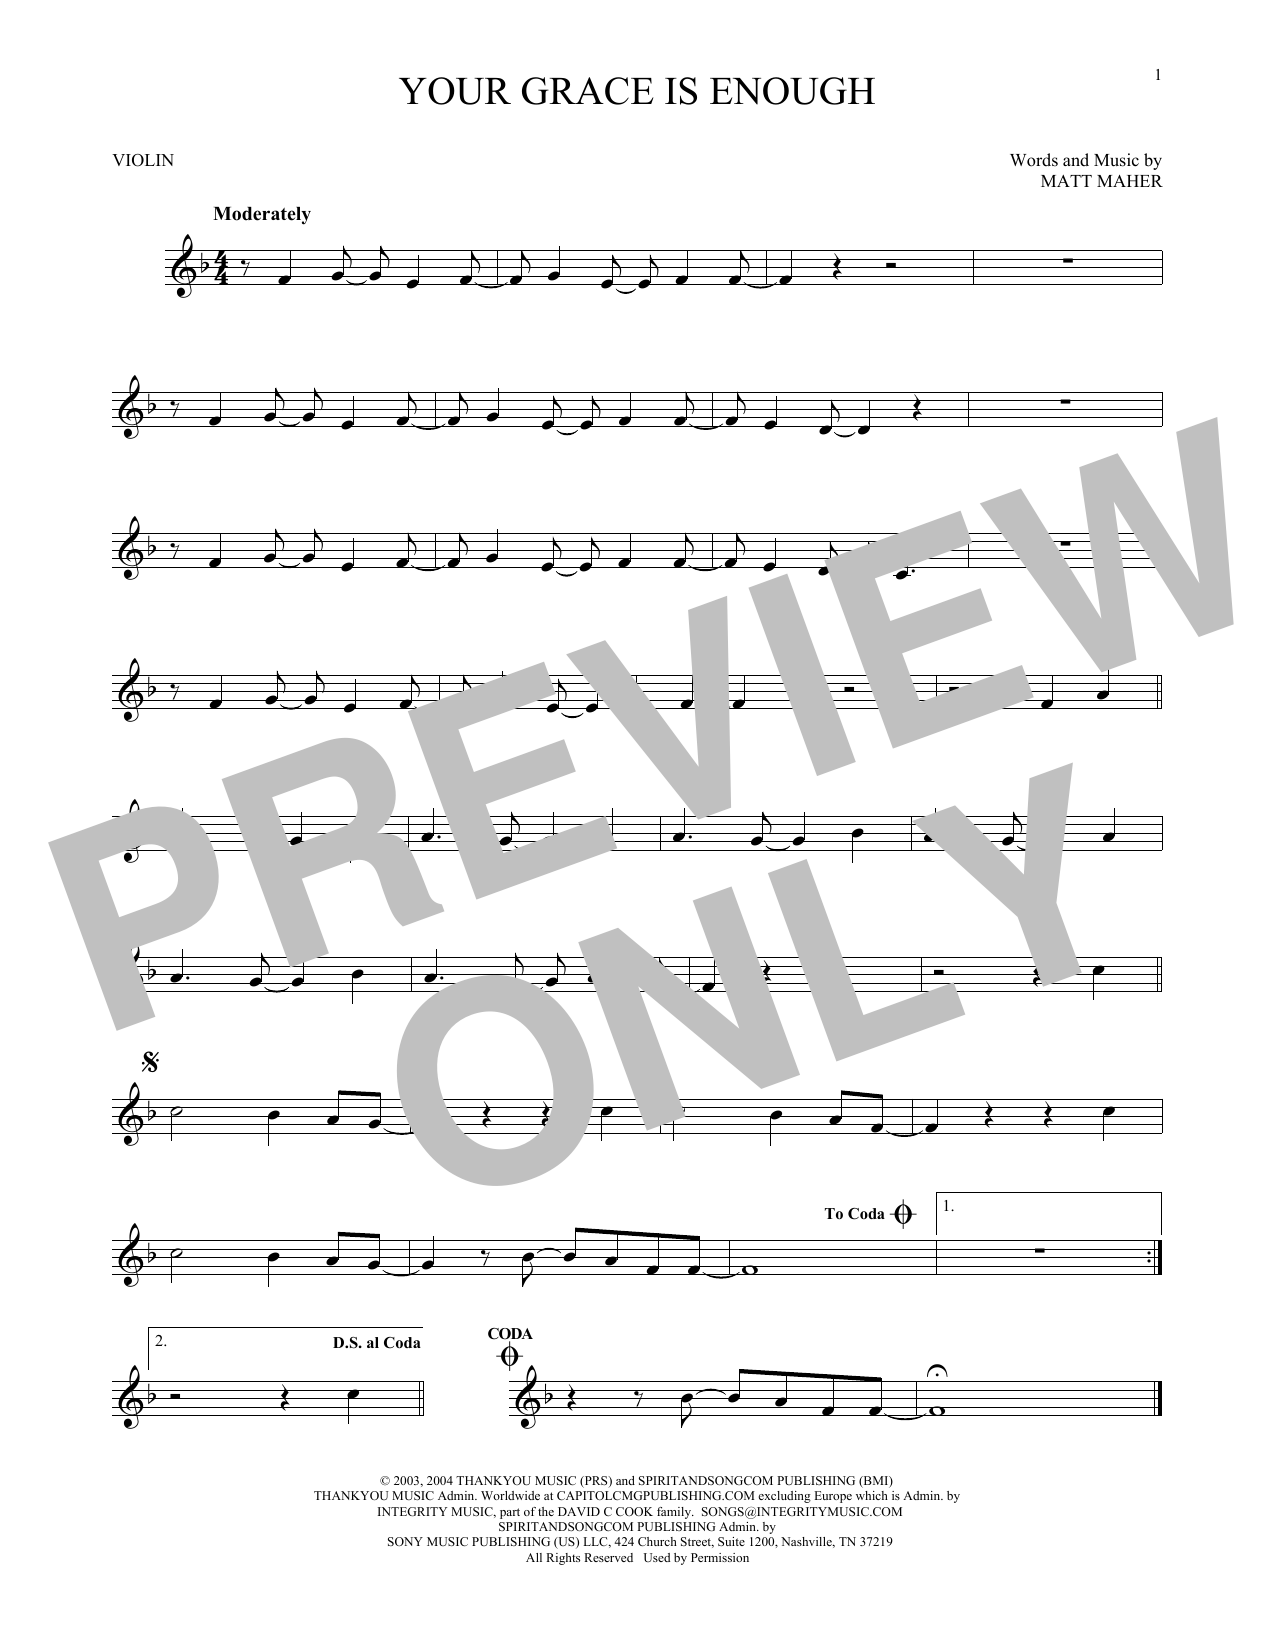 Chris Tomlin Your Grace Is Enough sheet music notes printable PDF score